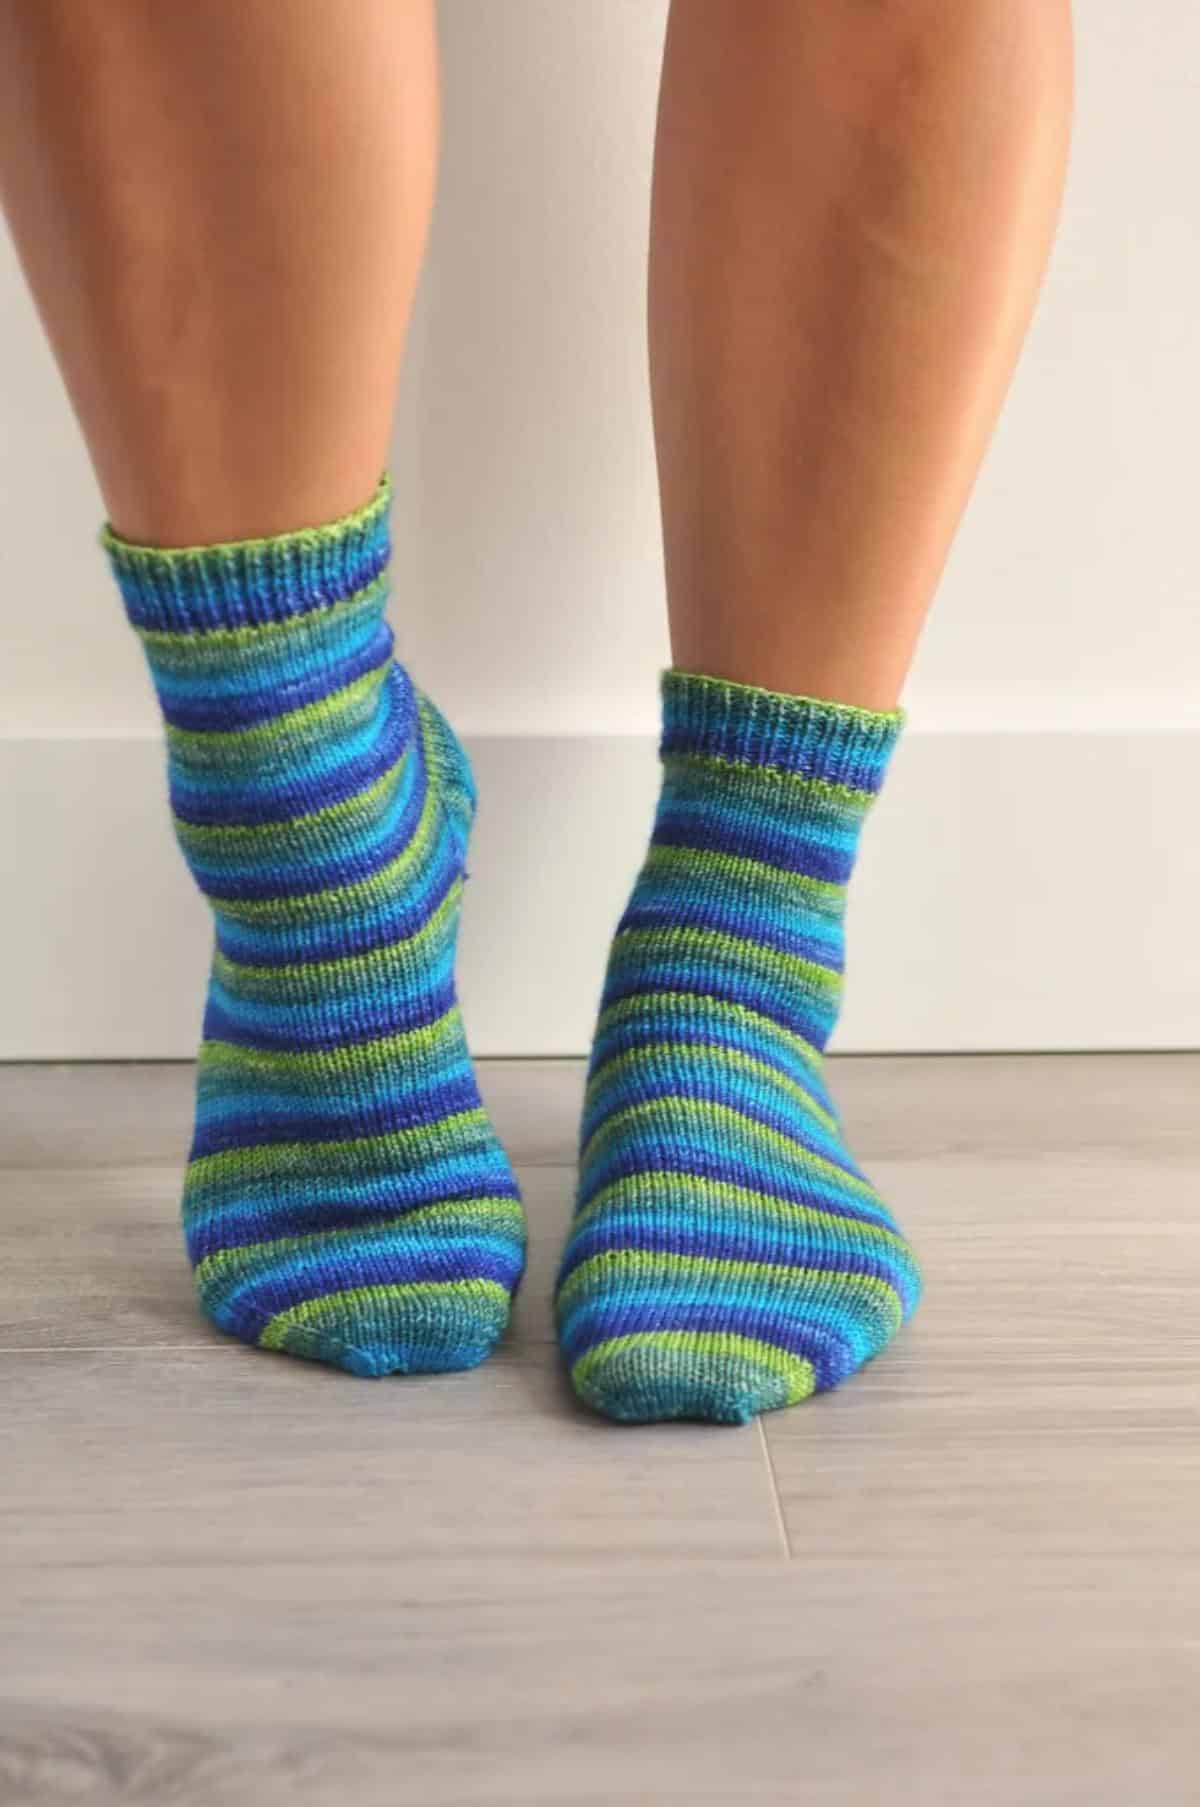 Ol’ Reliable Top Down Socks